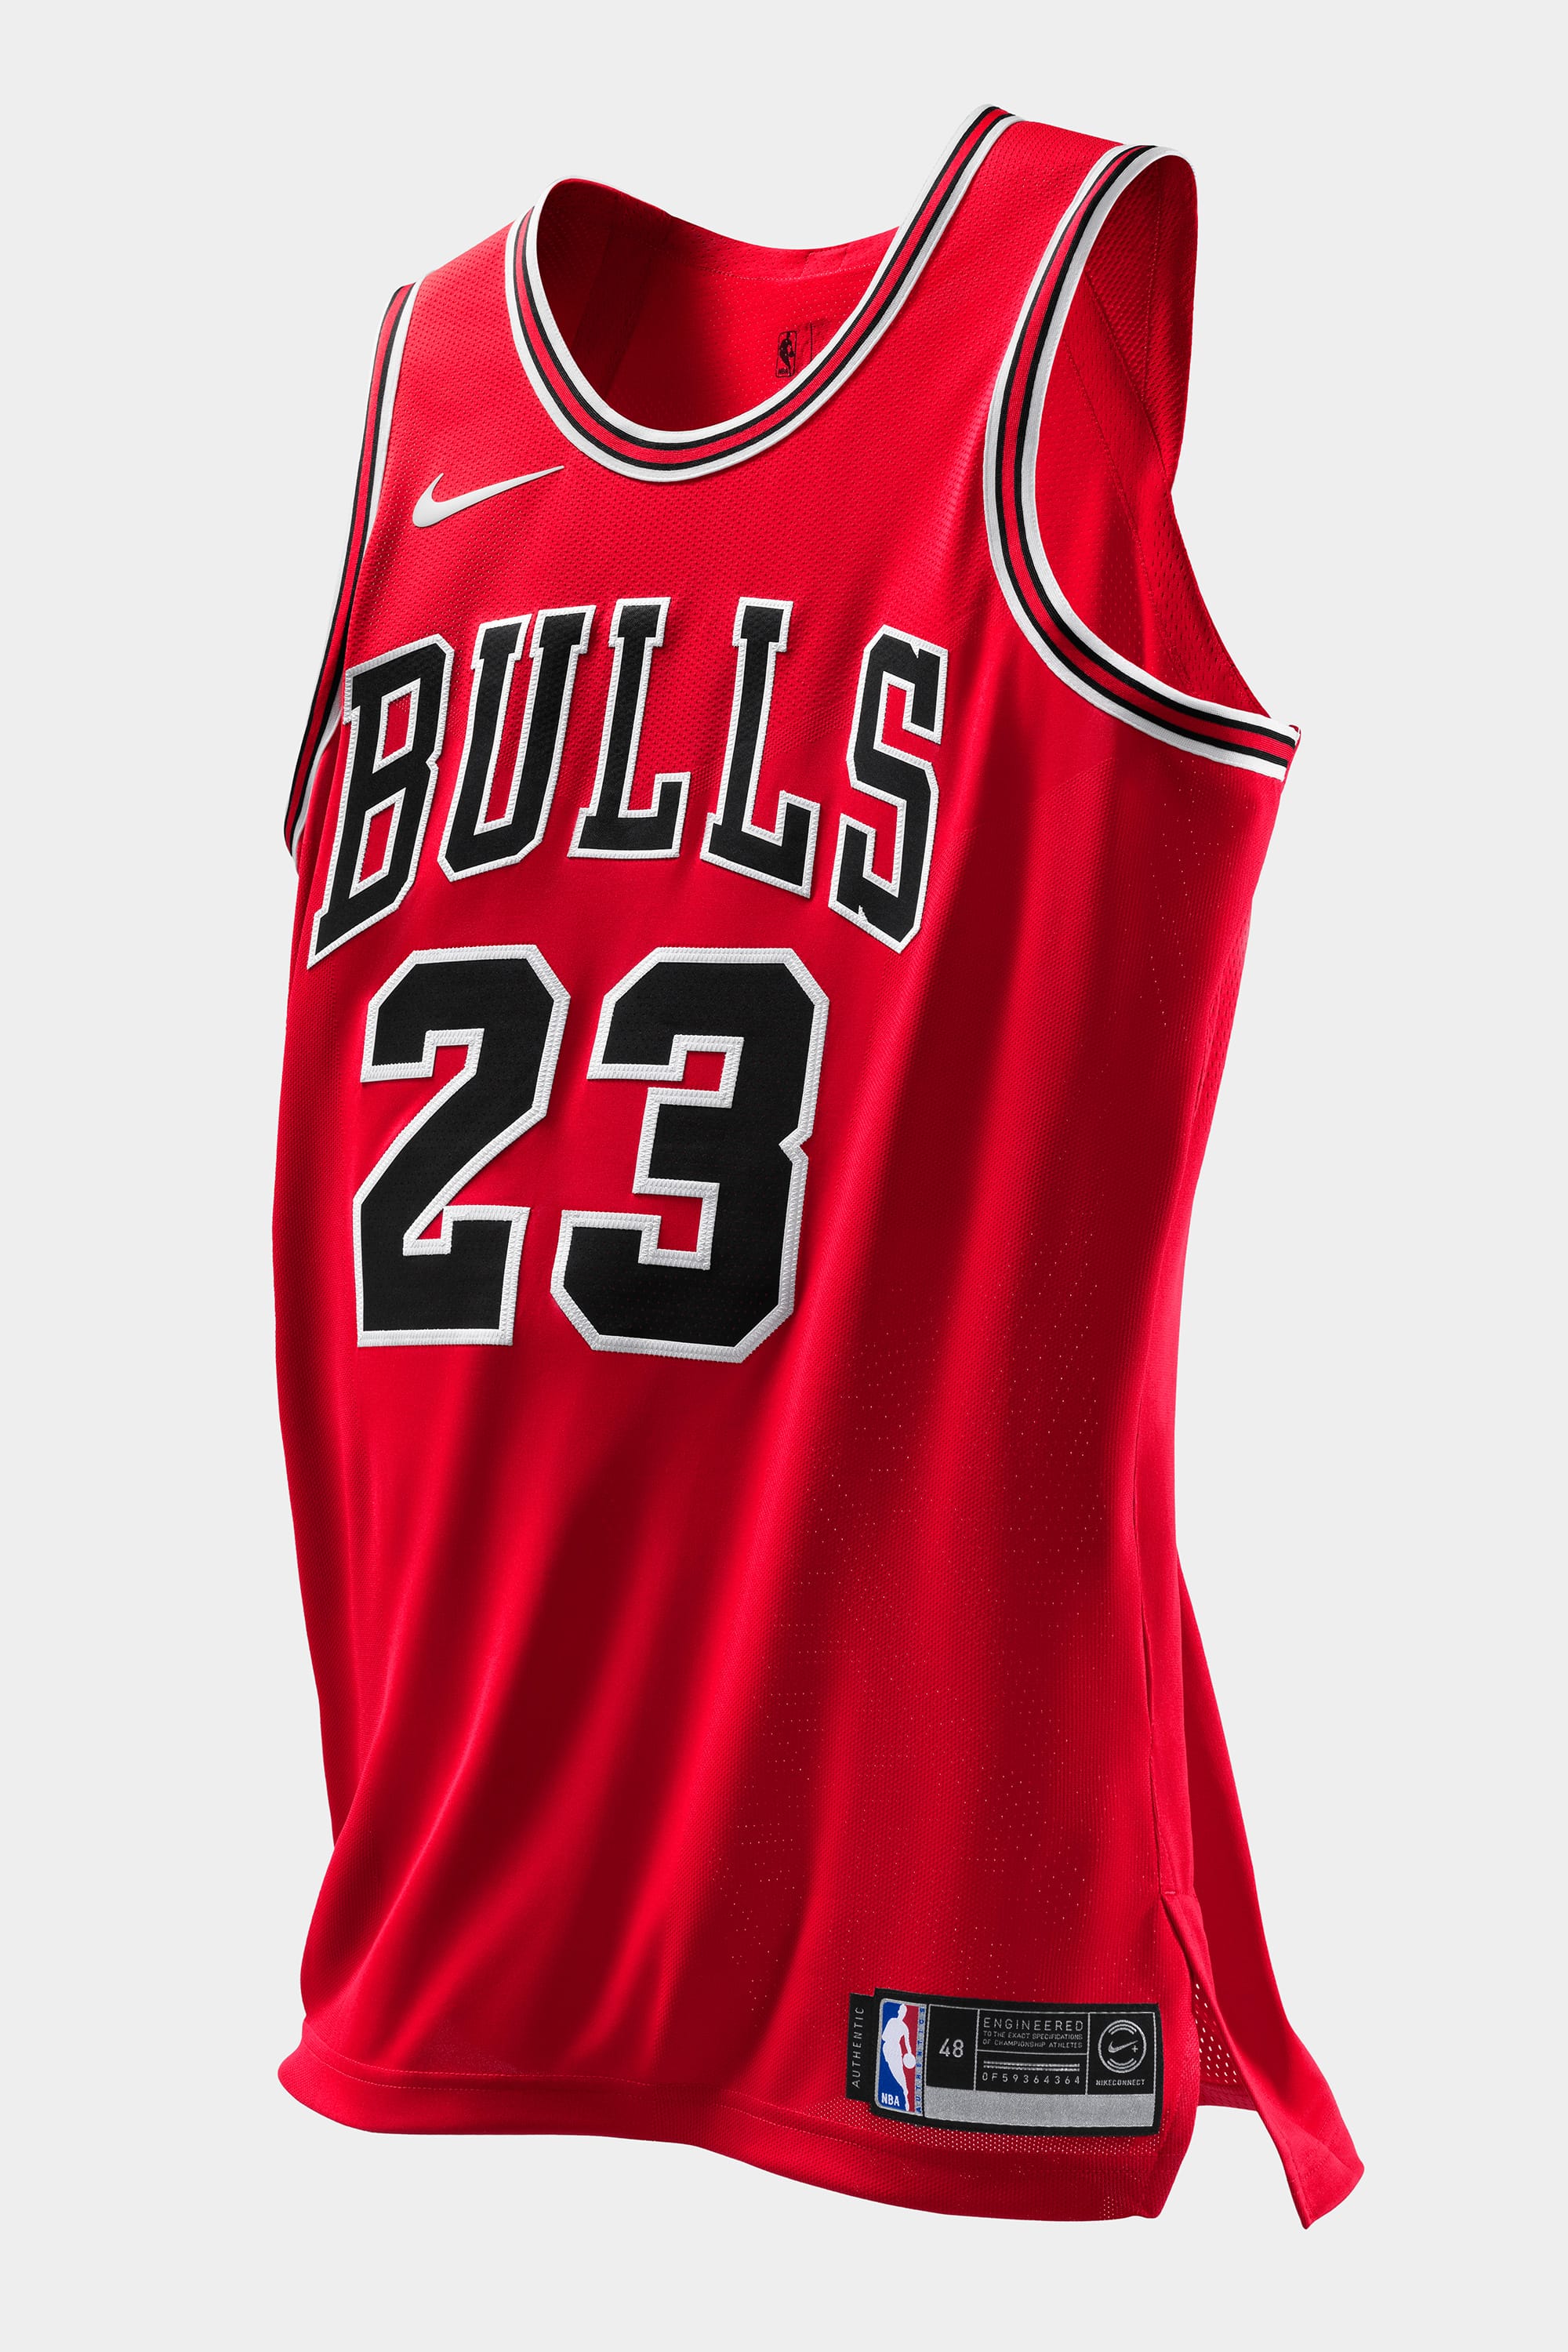 bulls 2019 jersey